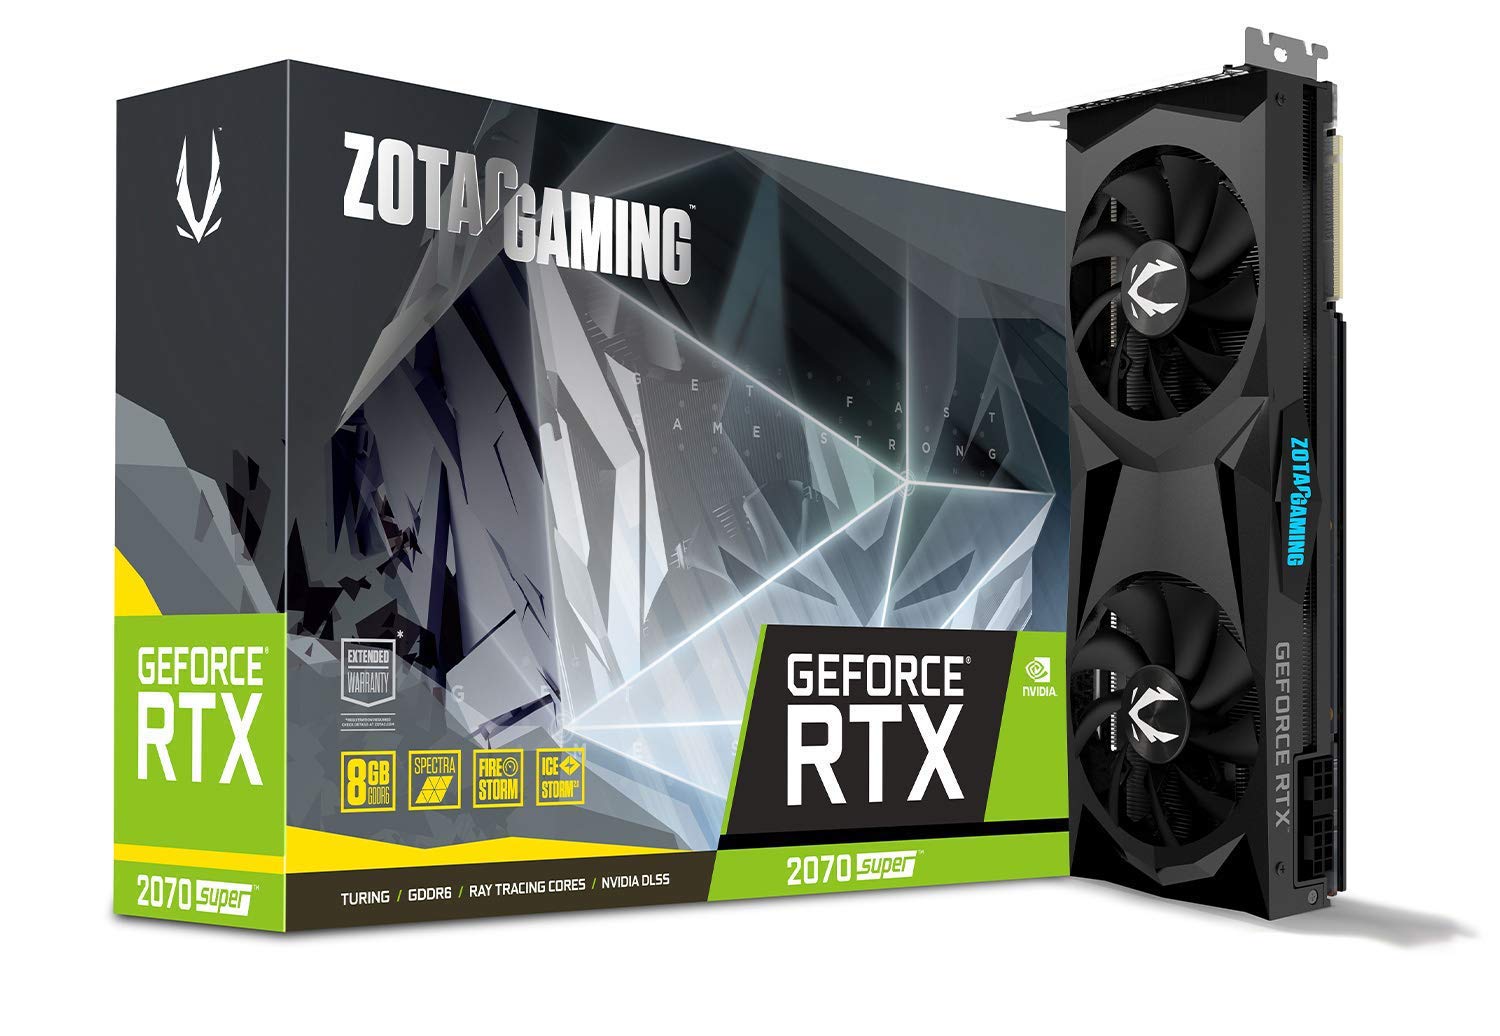 NVIDIA GTX 2070 Super GPU mining graphics cards